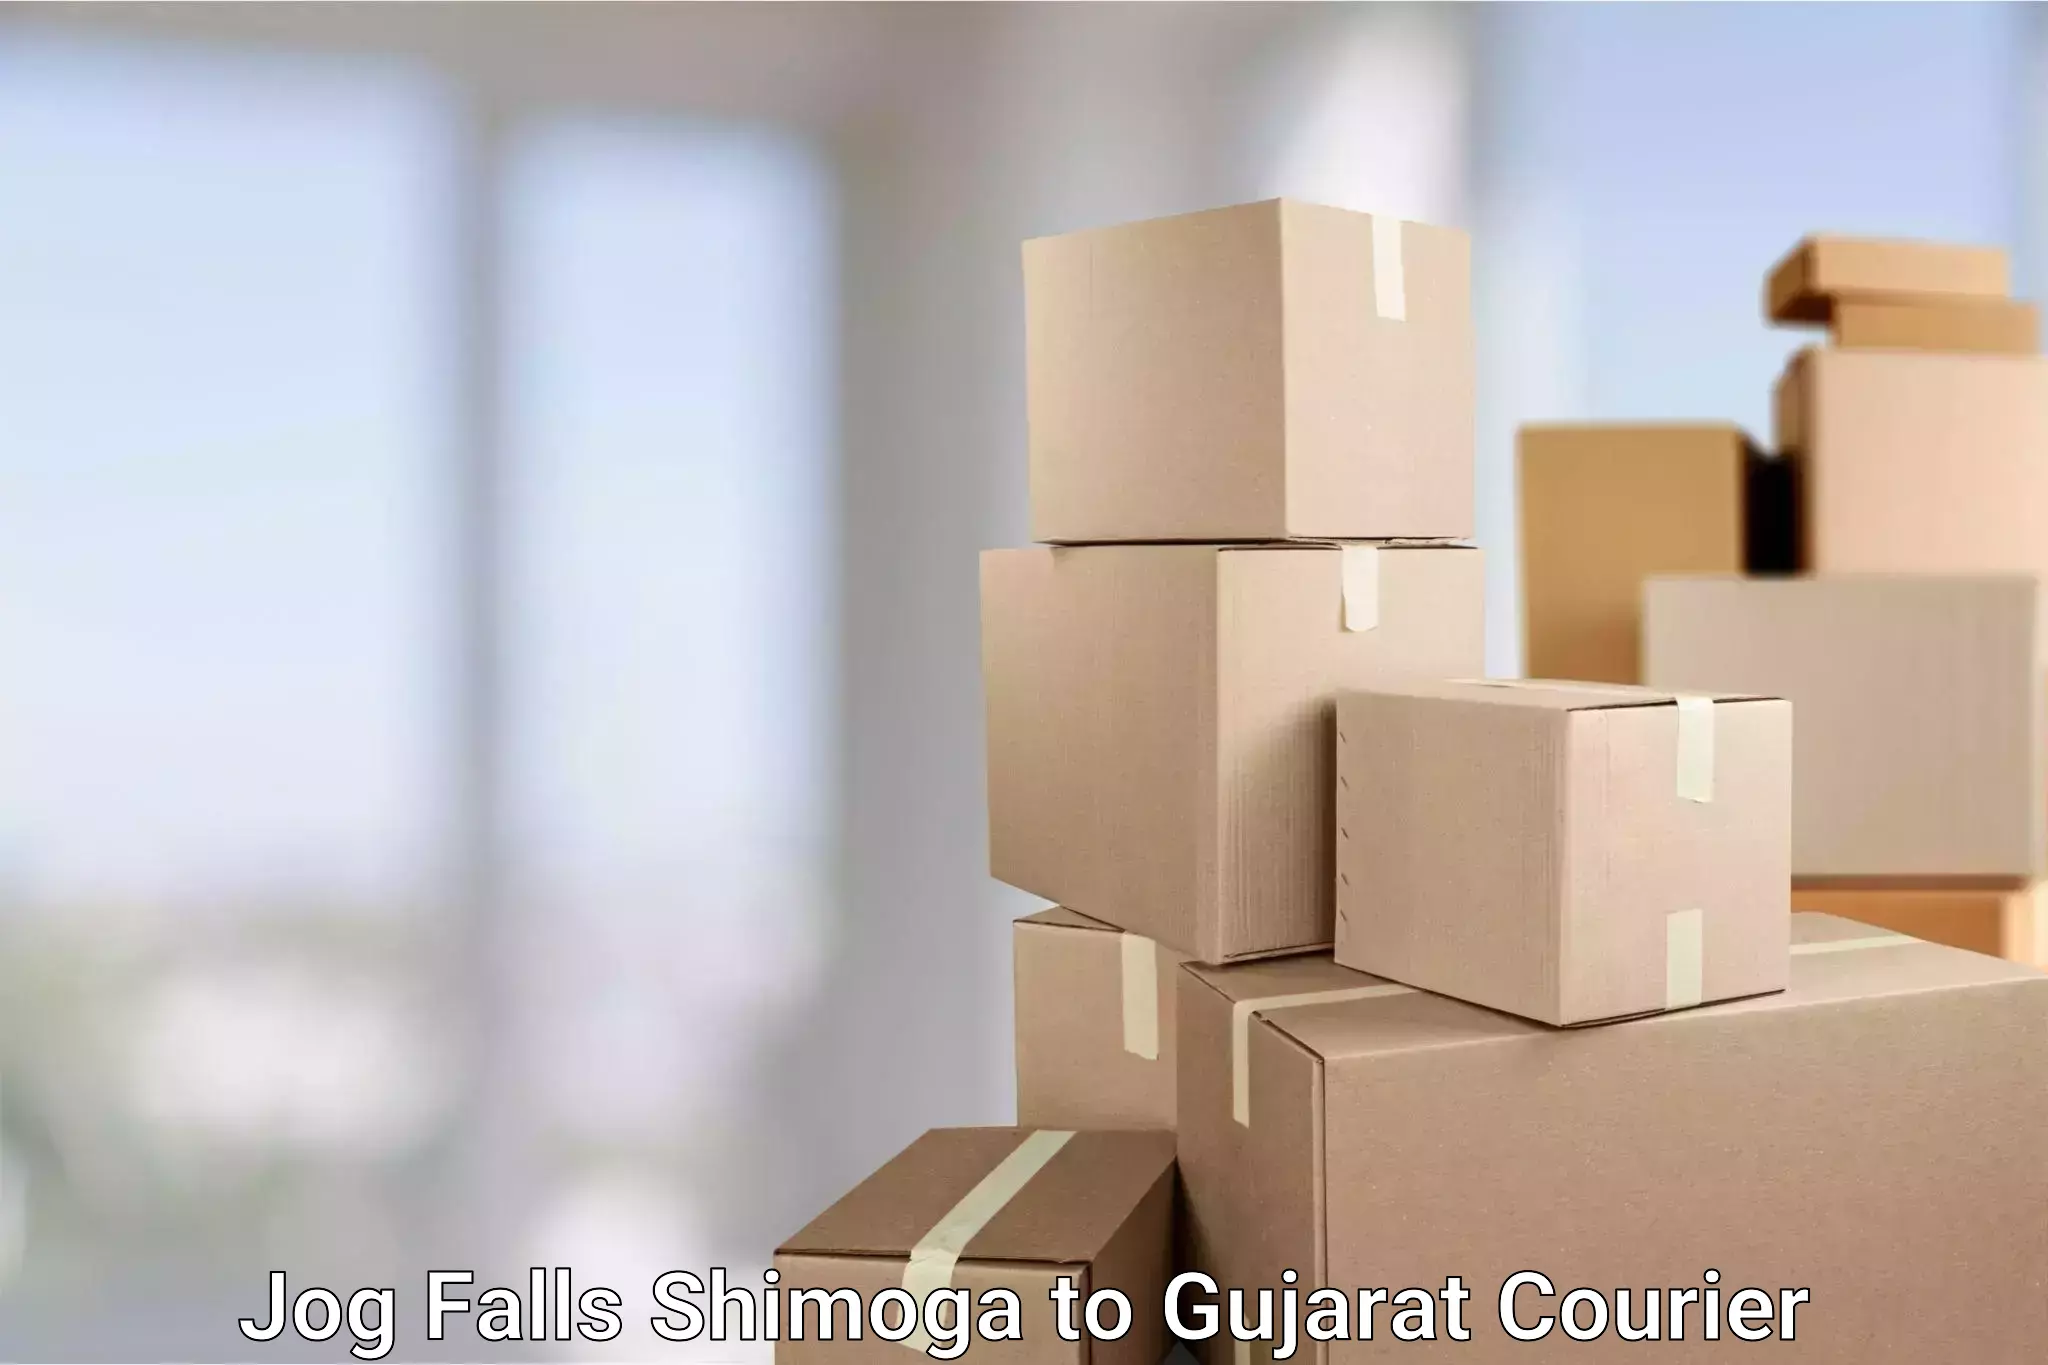 Same-day delivery solutions Jog Falls Shimoga to Gujarat